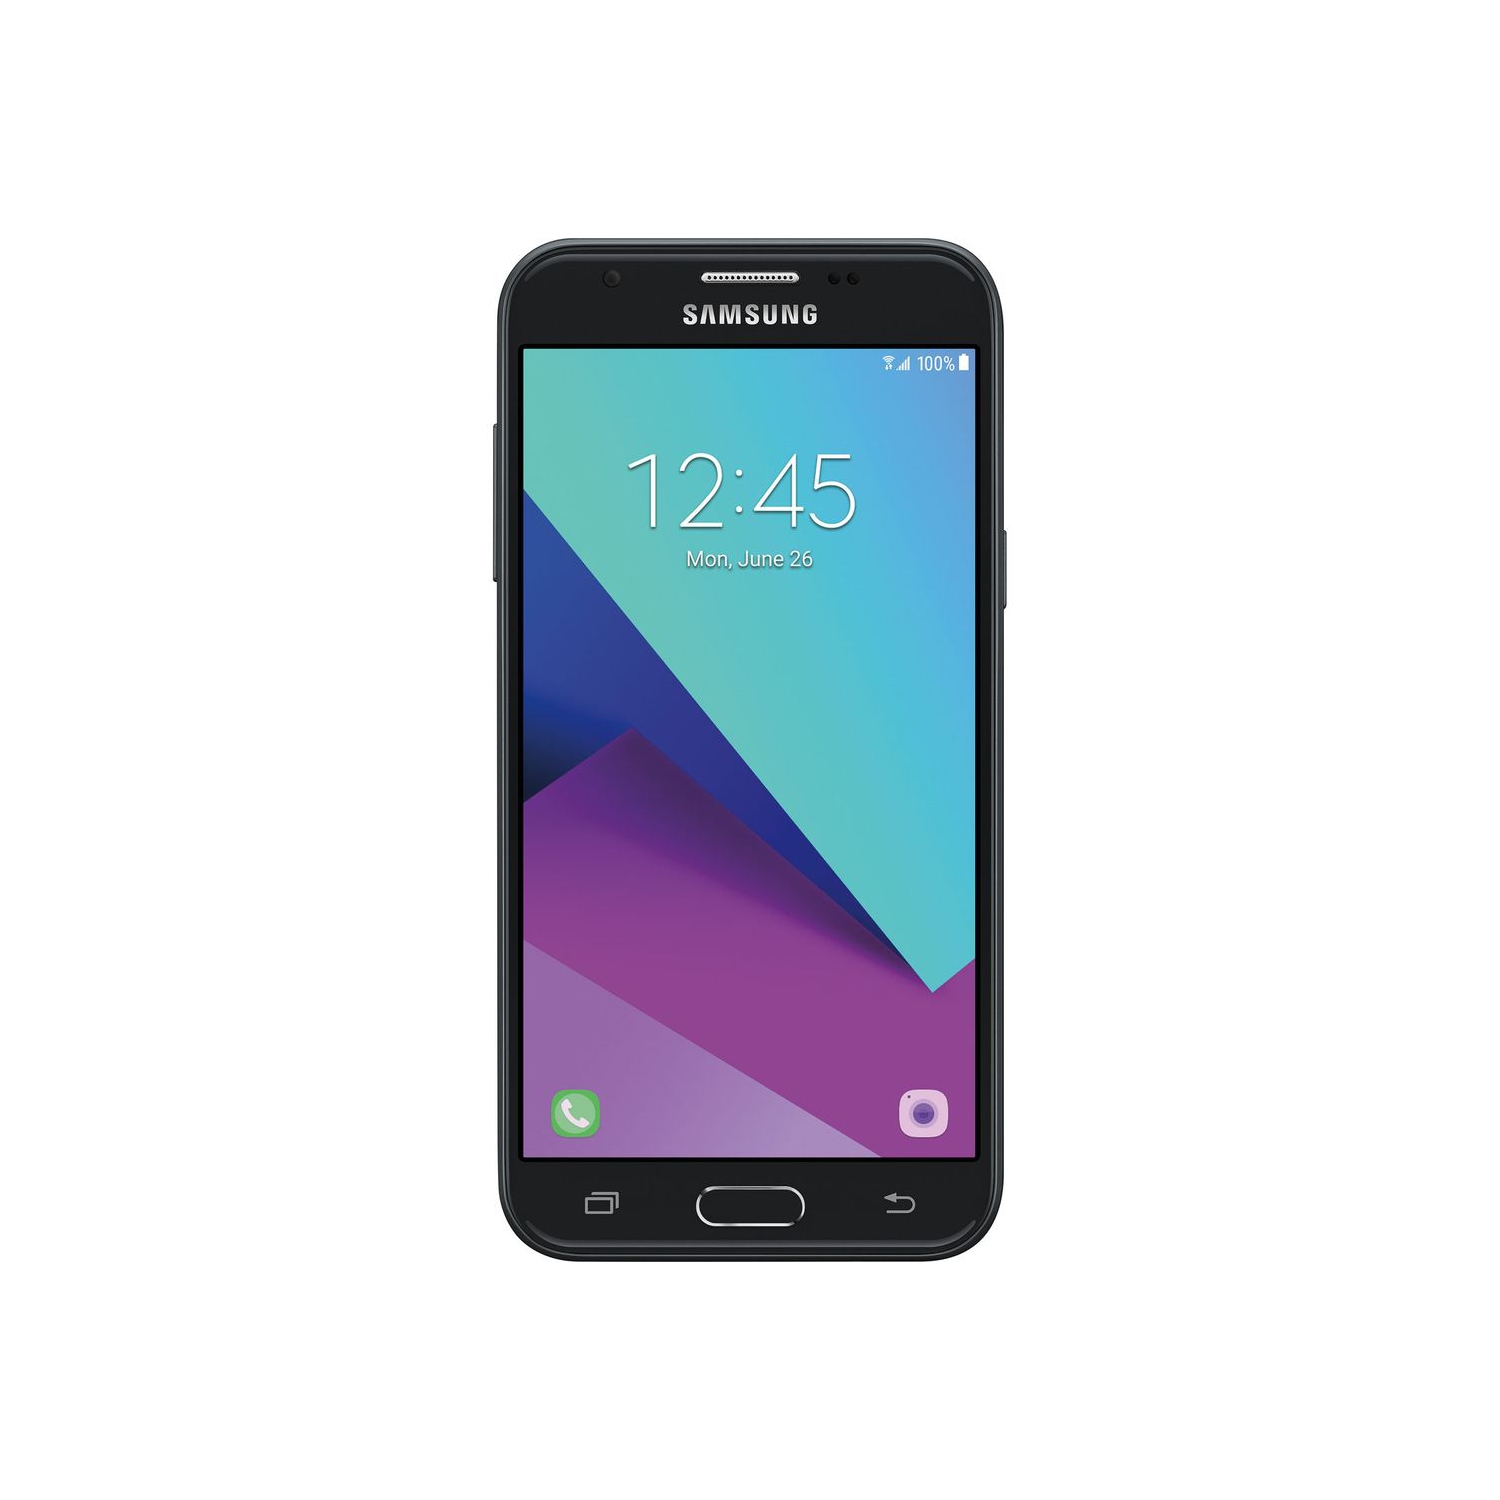 Samsung Galaxy J7 (2017) - 16GB Smartphone - Black - Unlocked - Certified Pre-Owned